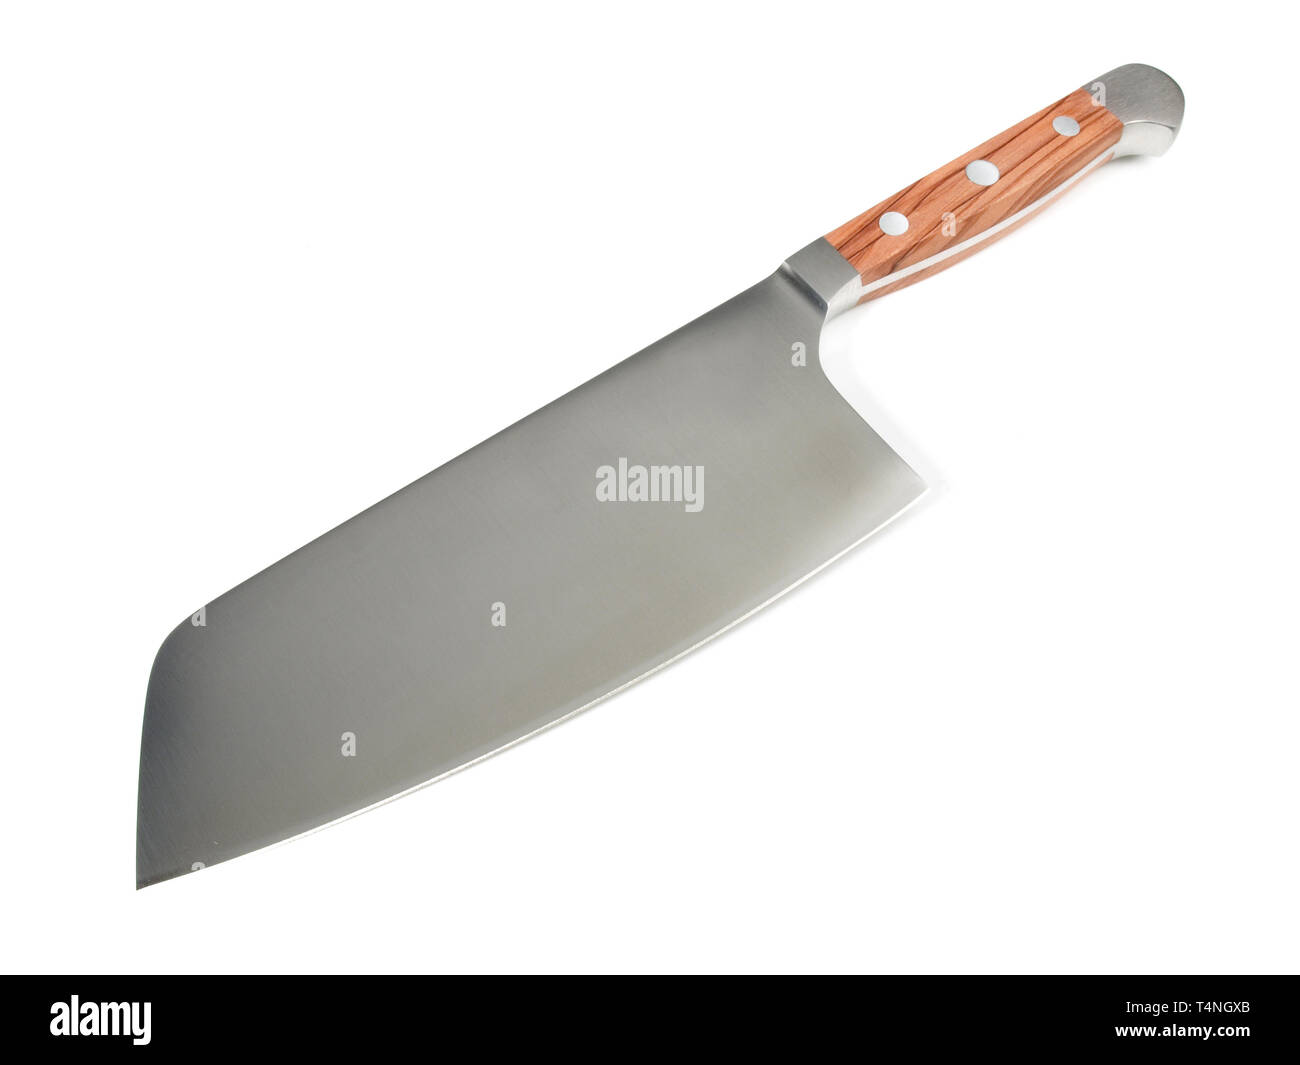 Japanese Cleaver Chopping Knife on white Background Stock Photo